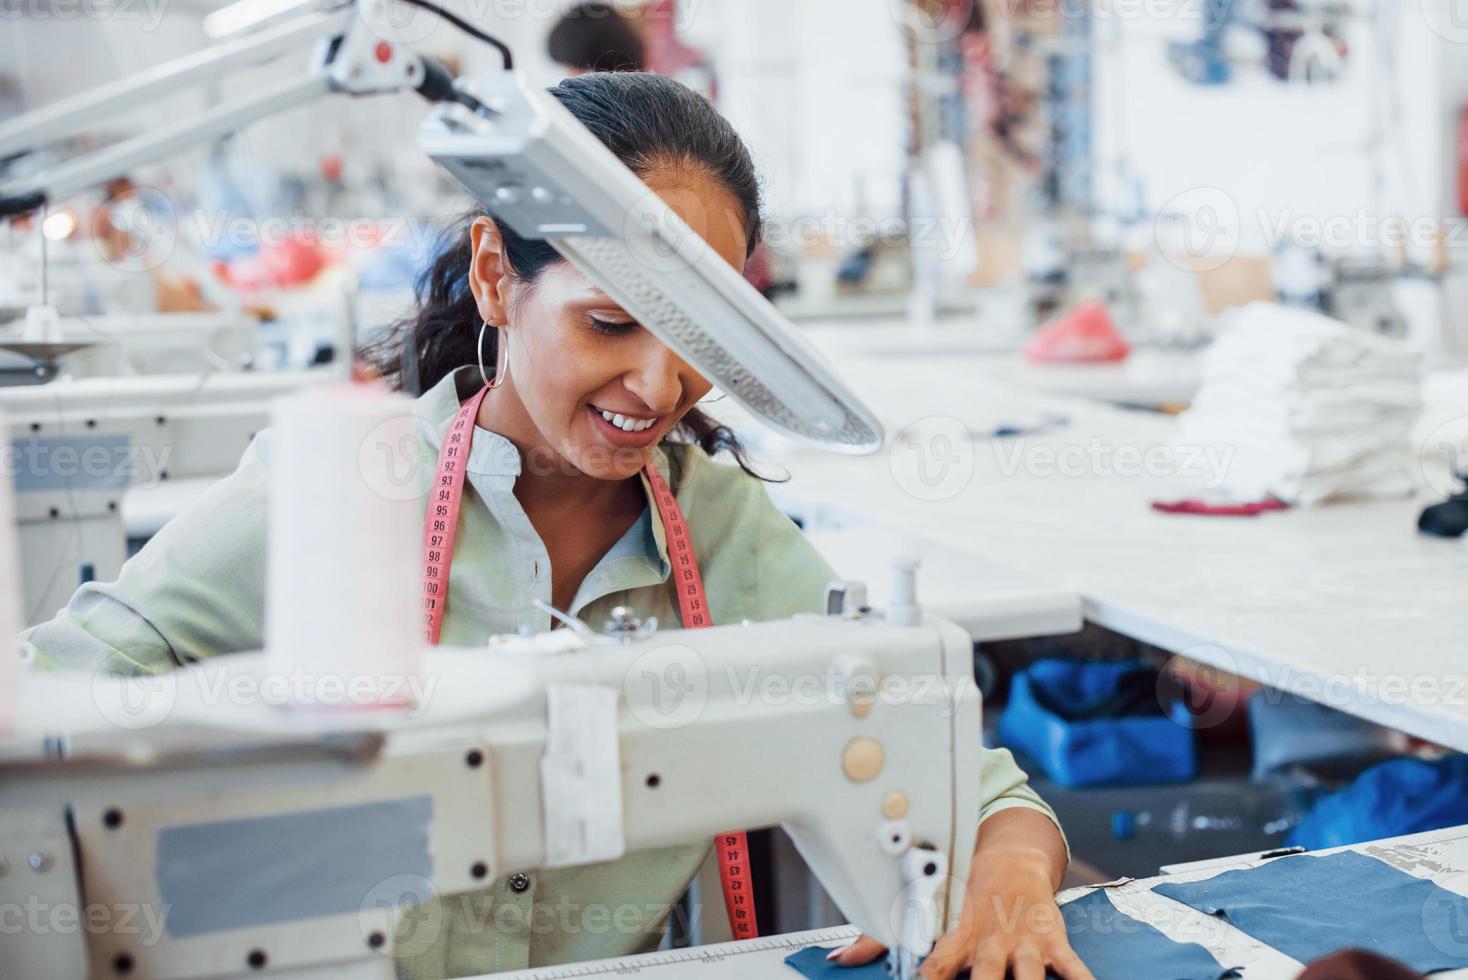 sarta donna cuce Abiti su cucire macchina nel fabbrica foto